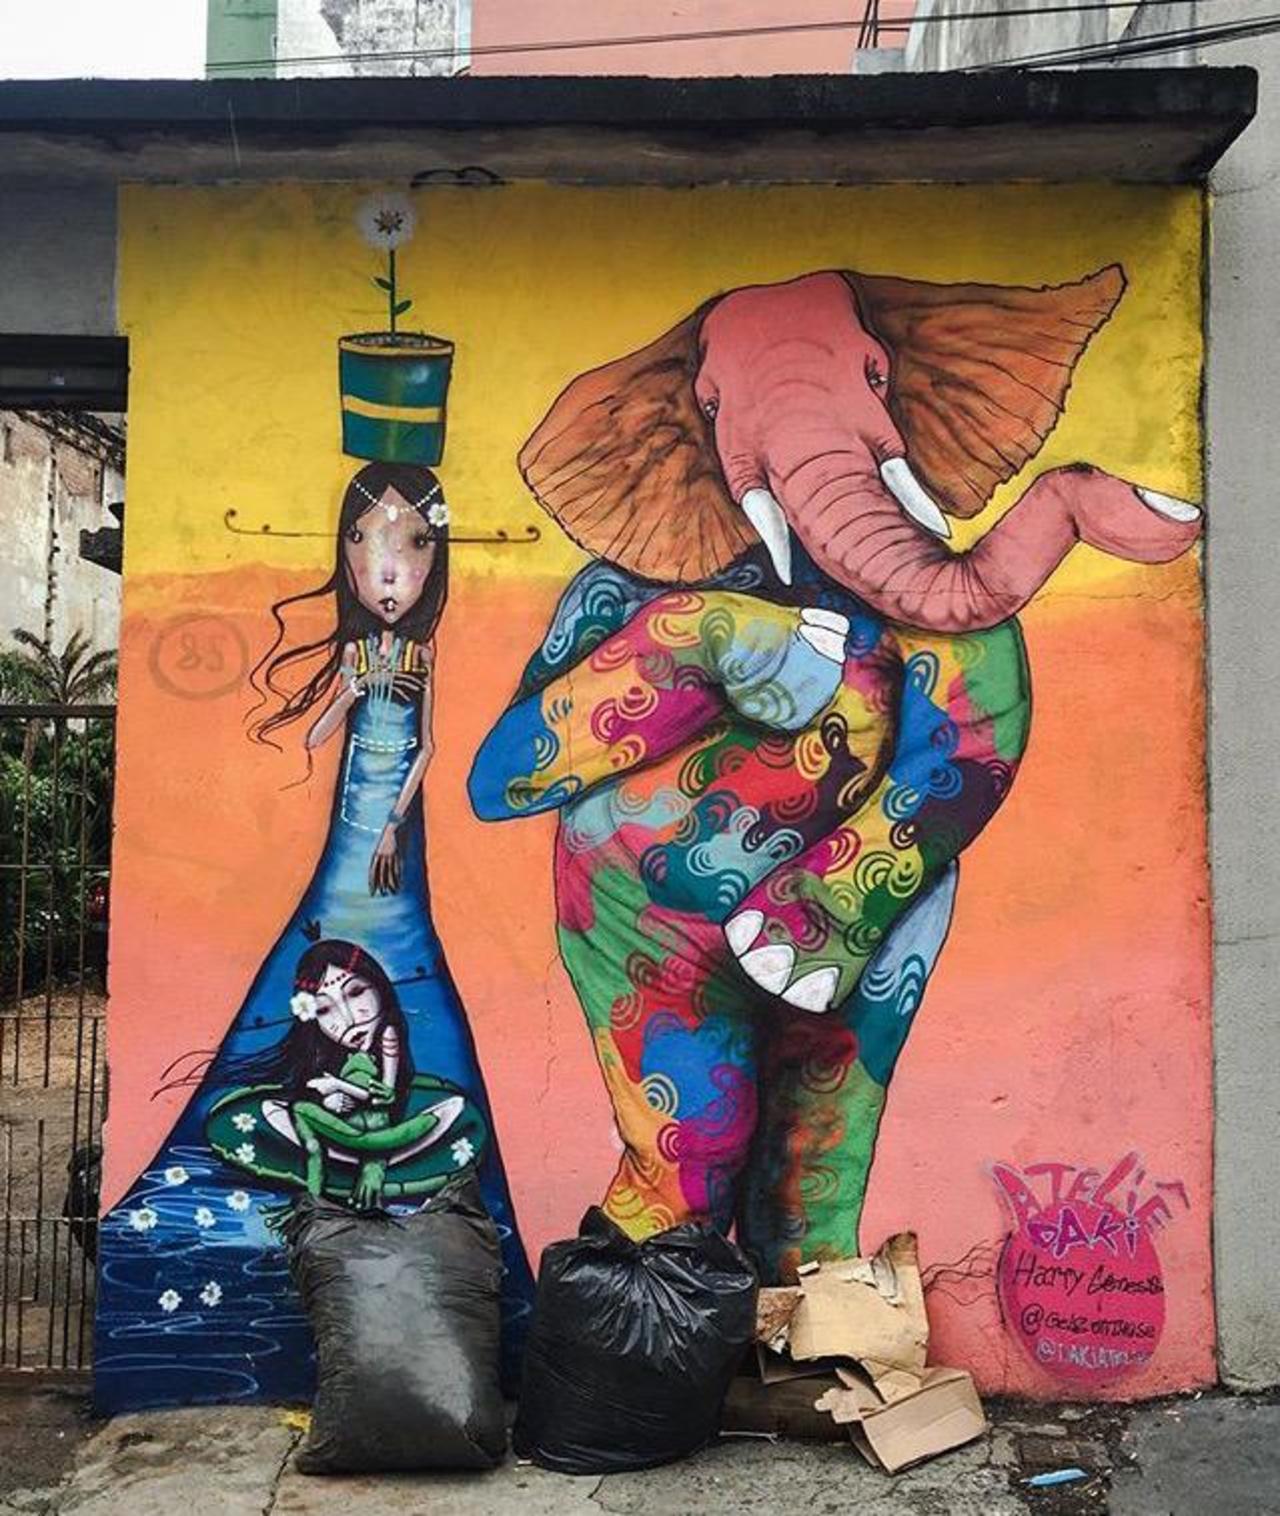 Street Art by Harry Geneis & Gelson in São Paulo #art #mural #graffiti #streetart http://t.co/SlLbhuMZfD http://twitter.com/charlesjackso14/status/648017655975313408